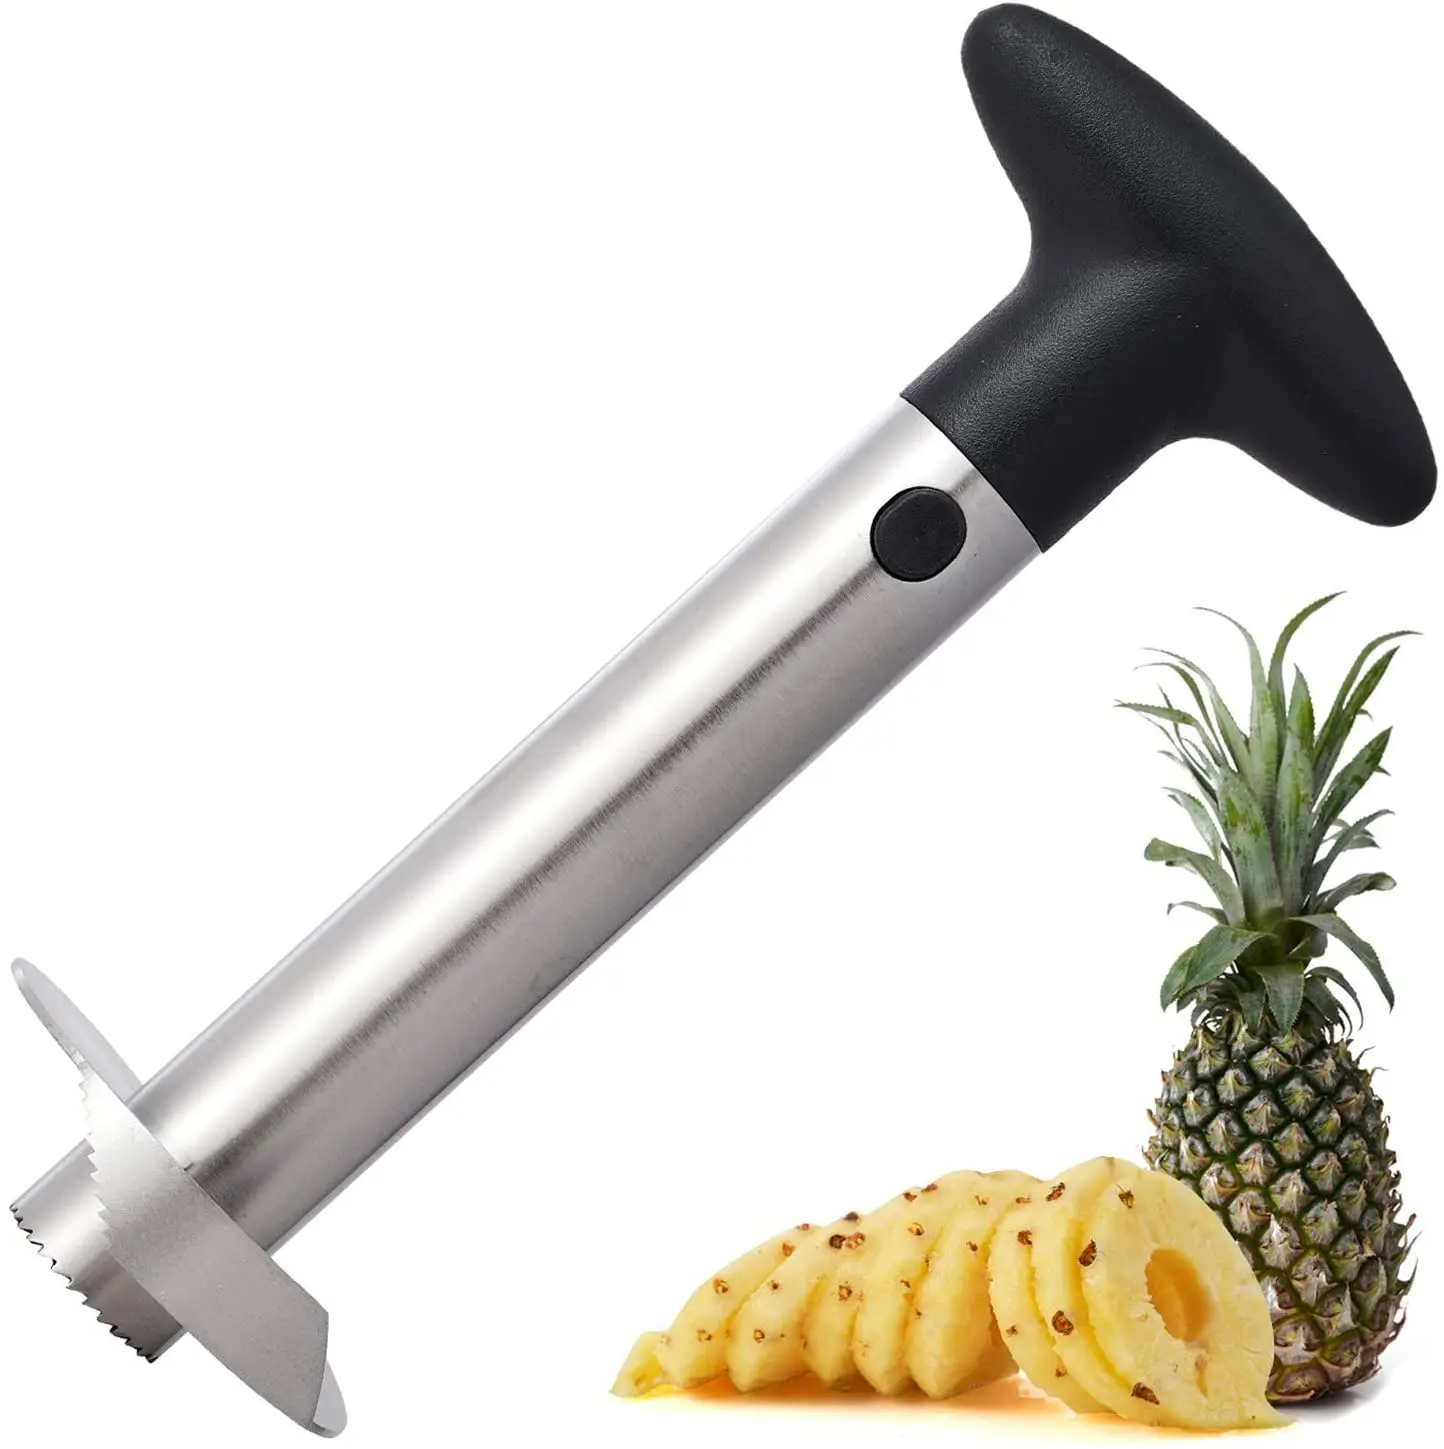 

Food Grade Sharp Blade Stainless Steel Manual Pineapple Corer and Slicer Cutter for Diced Fruit Rings, Black